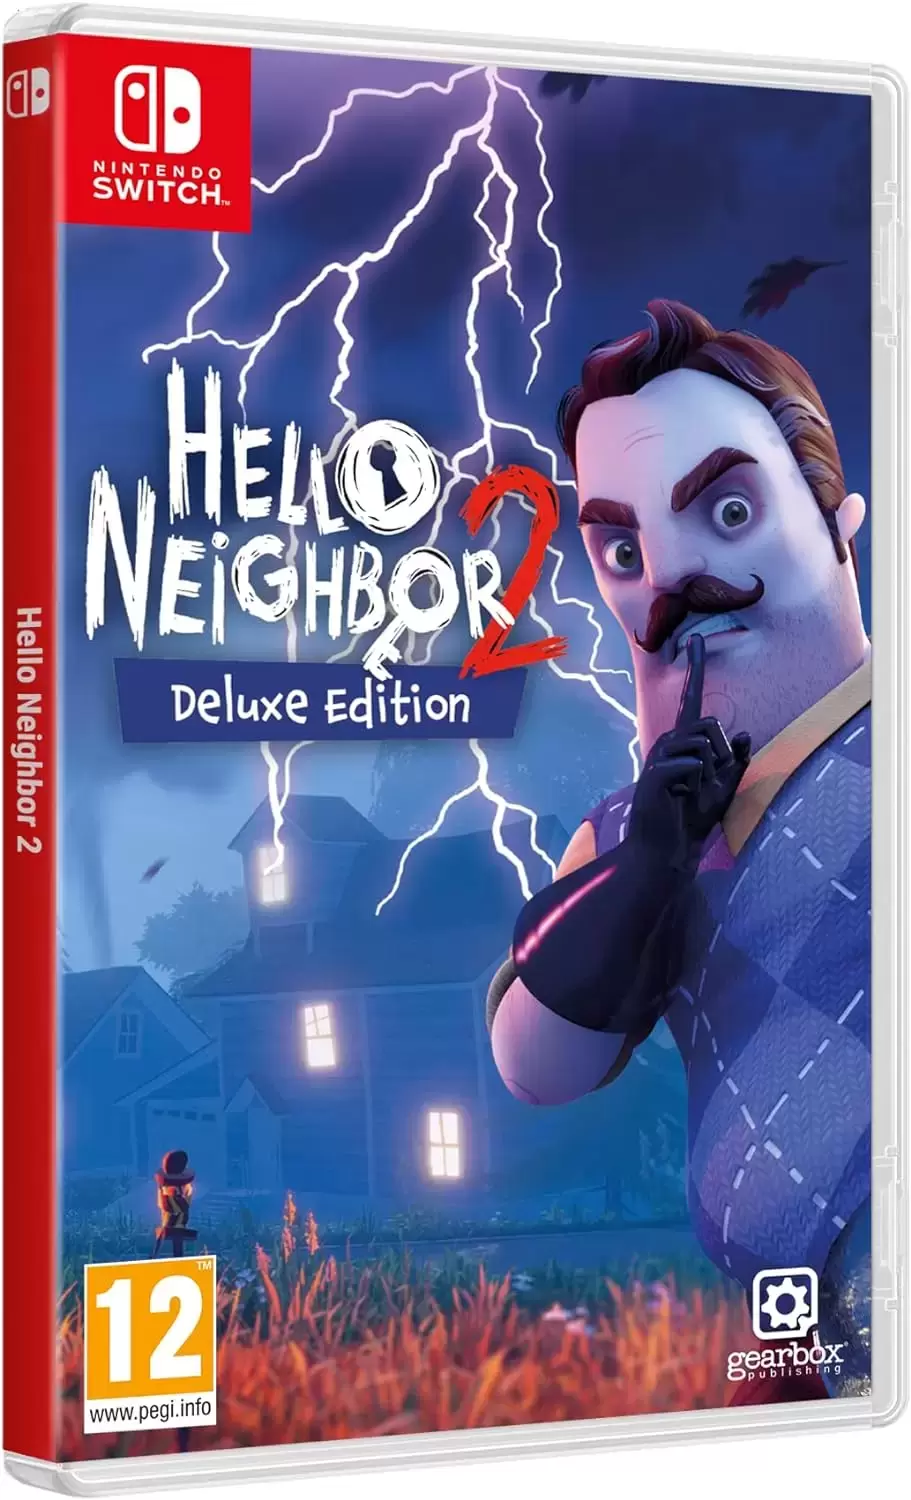 Nintendo Switch Games - Hello Neighbor 2 - Deluxe Edition